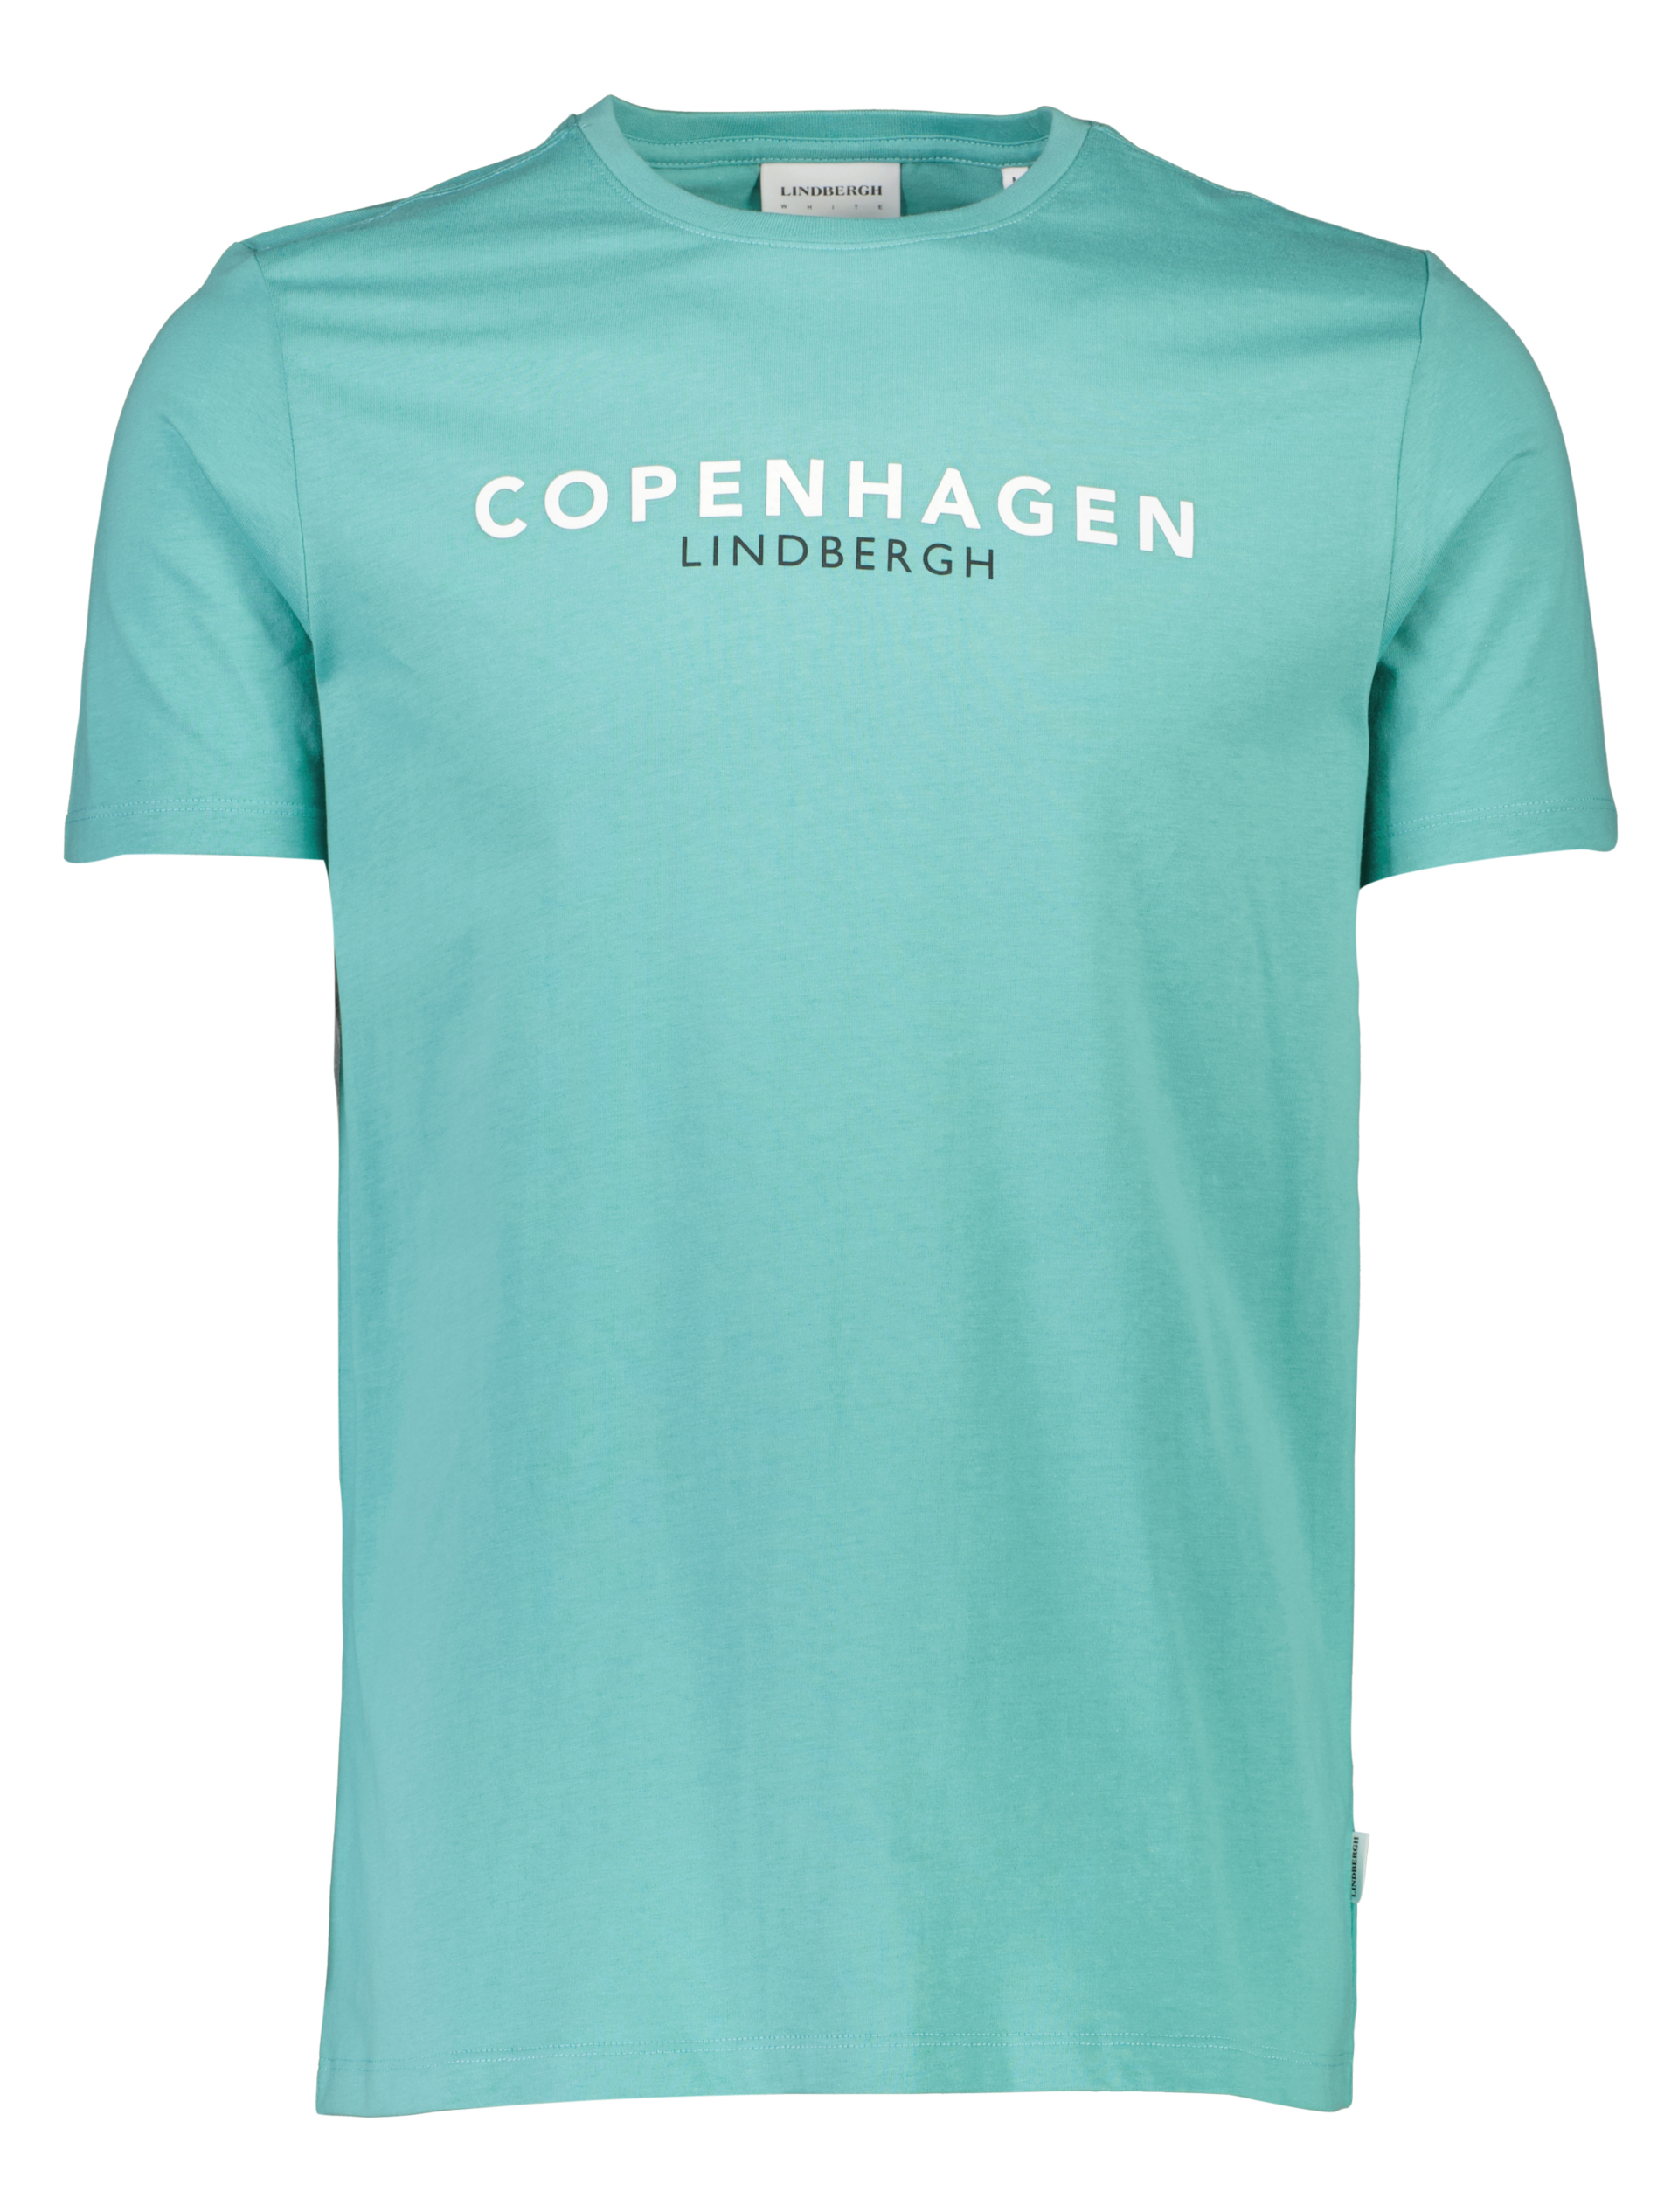 Lindbergh T-shirt grön / lt green 223